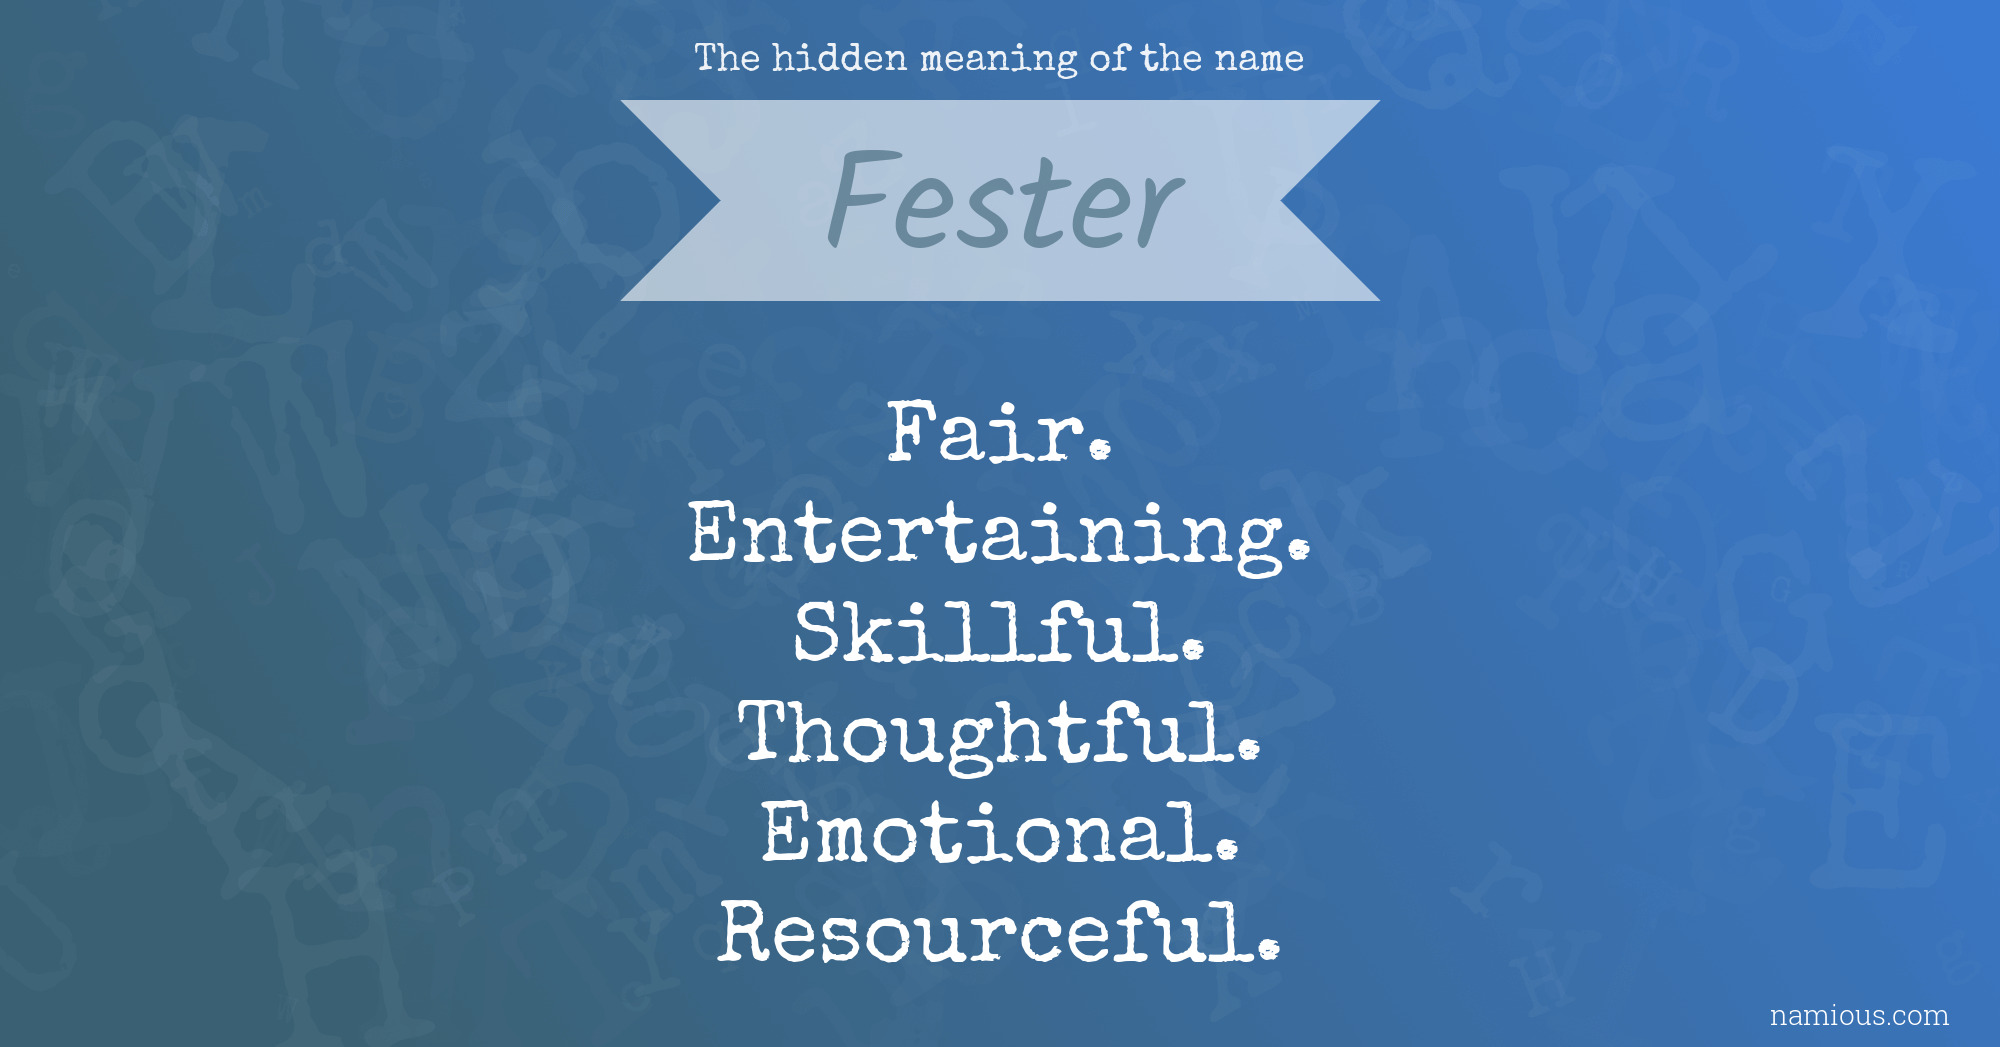 Fester meaning